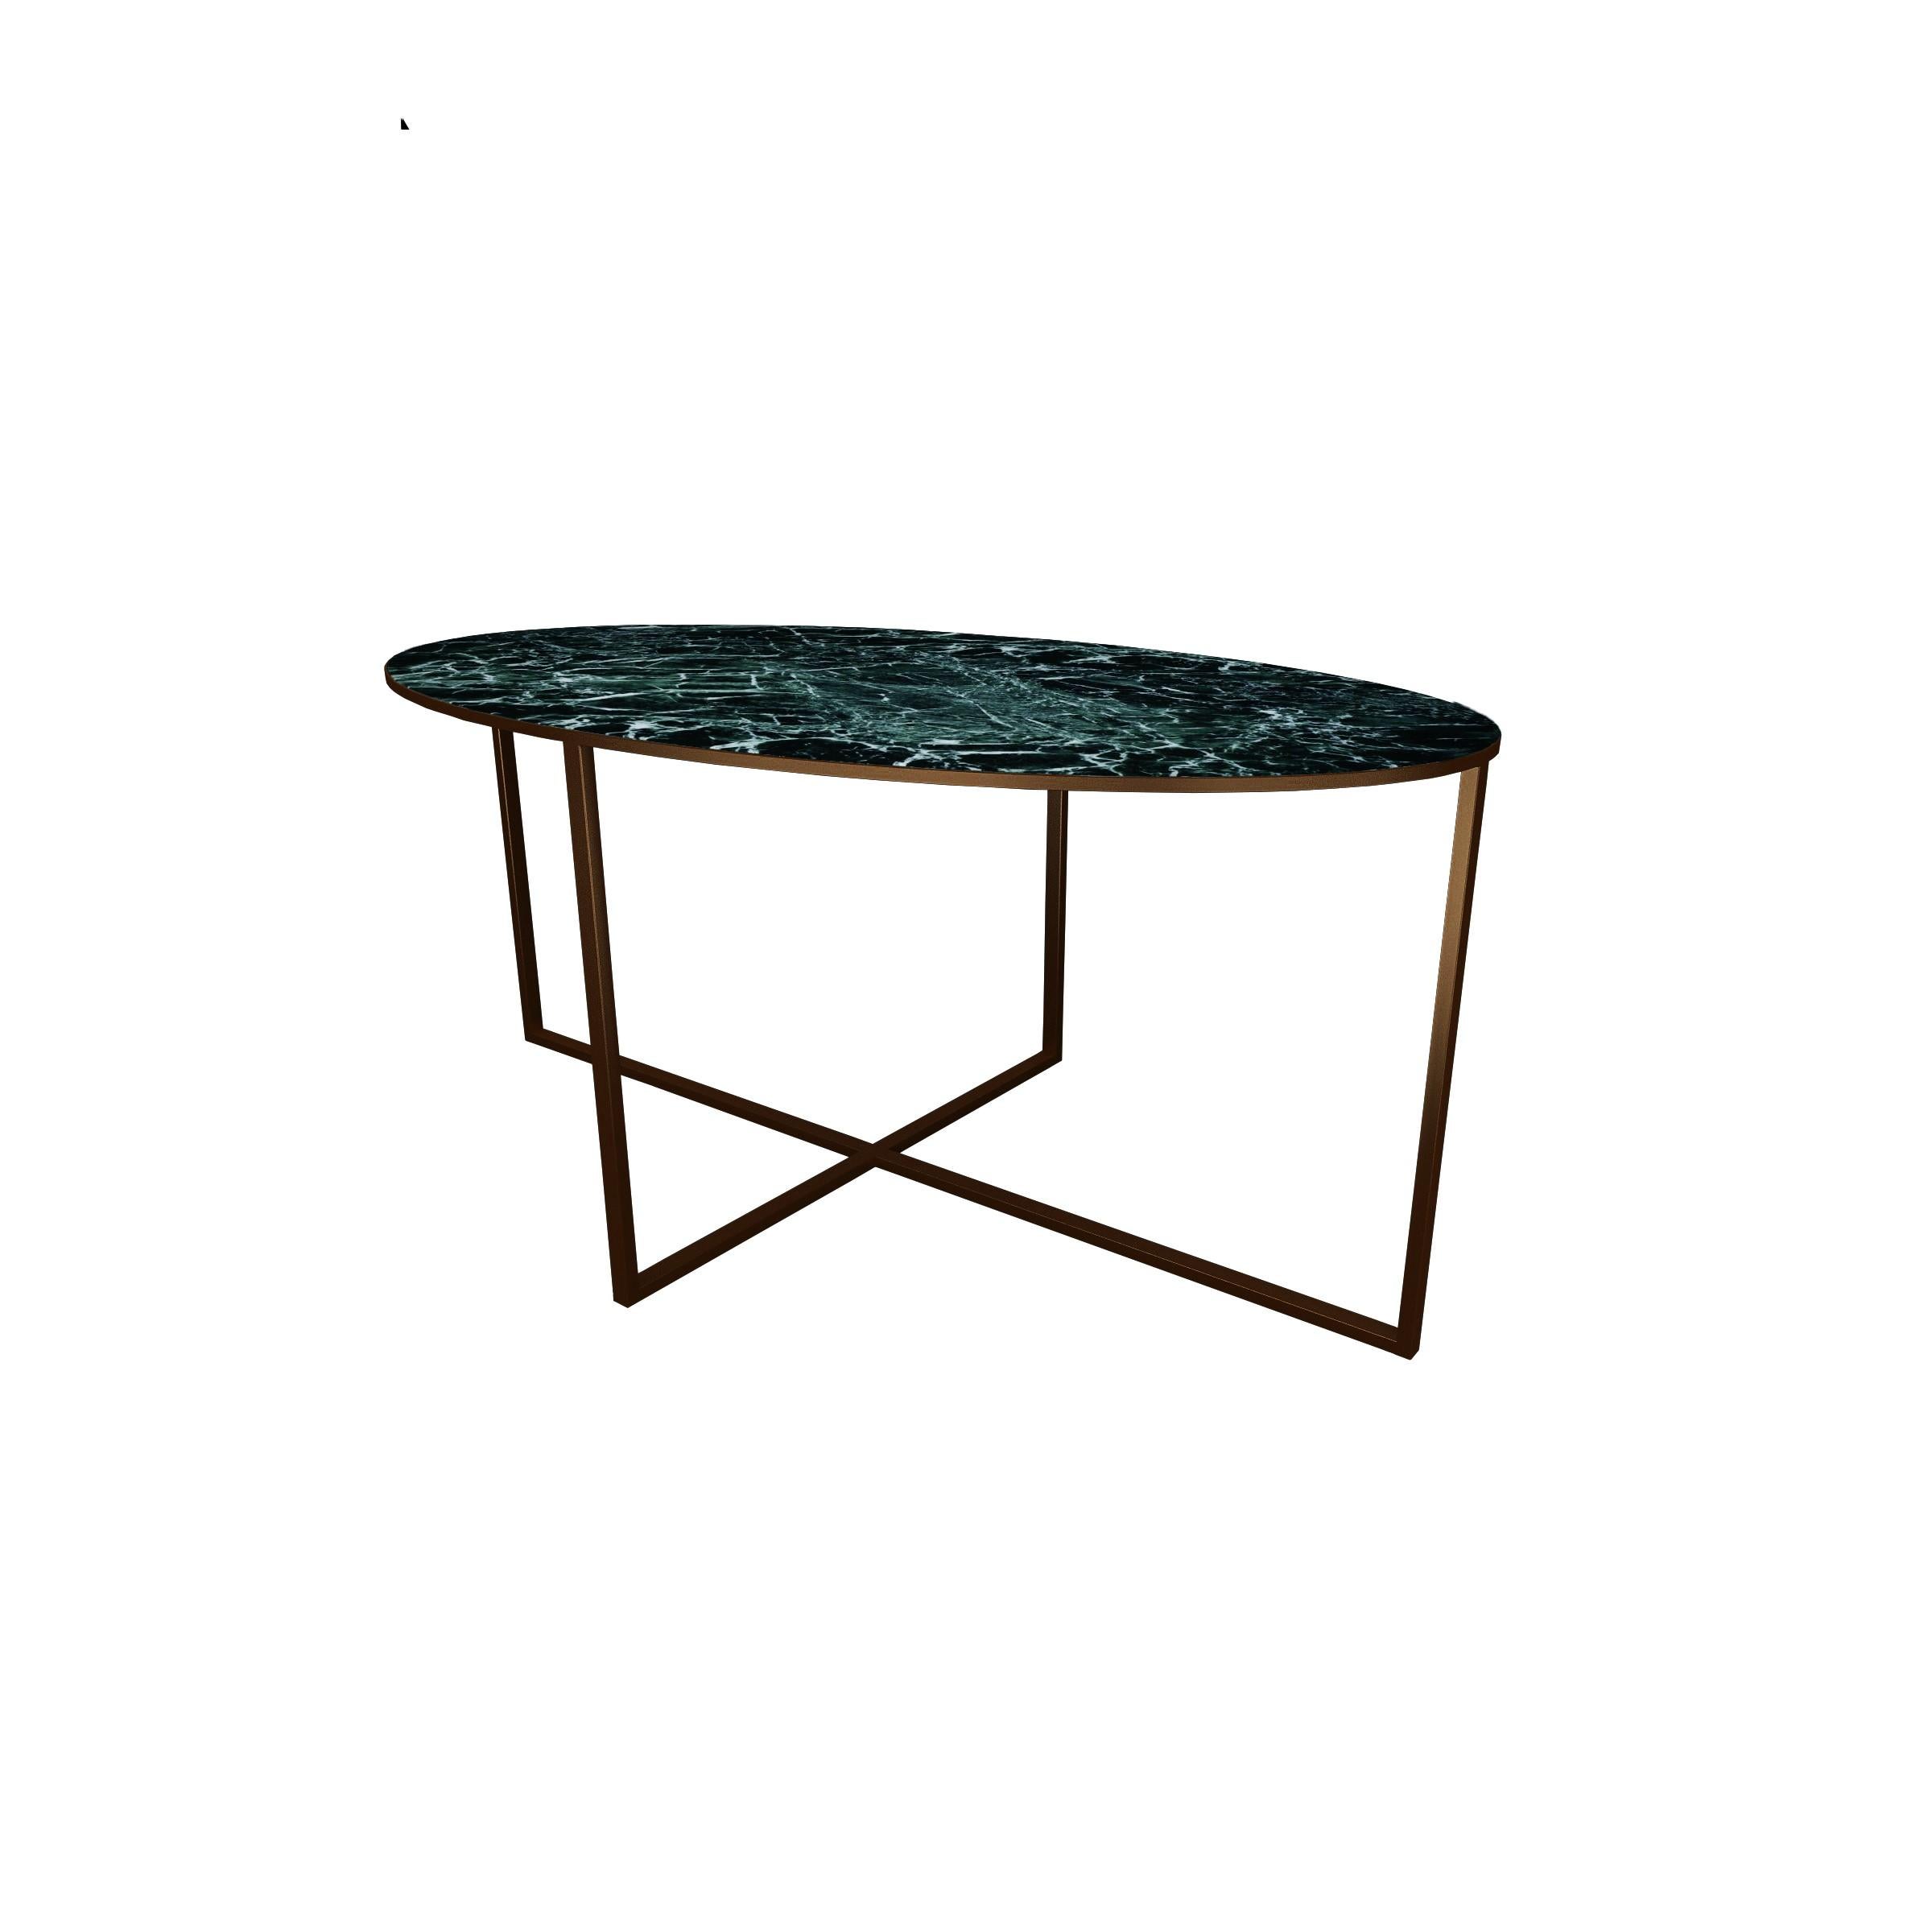 Scandinavian Modern NORDST MIA Dining Table, Italian Grey Rain Marble, Danish Modern Design, New For Sale